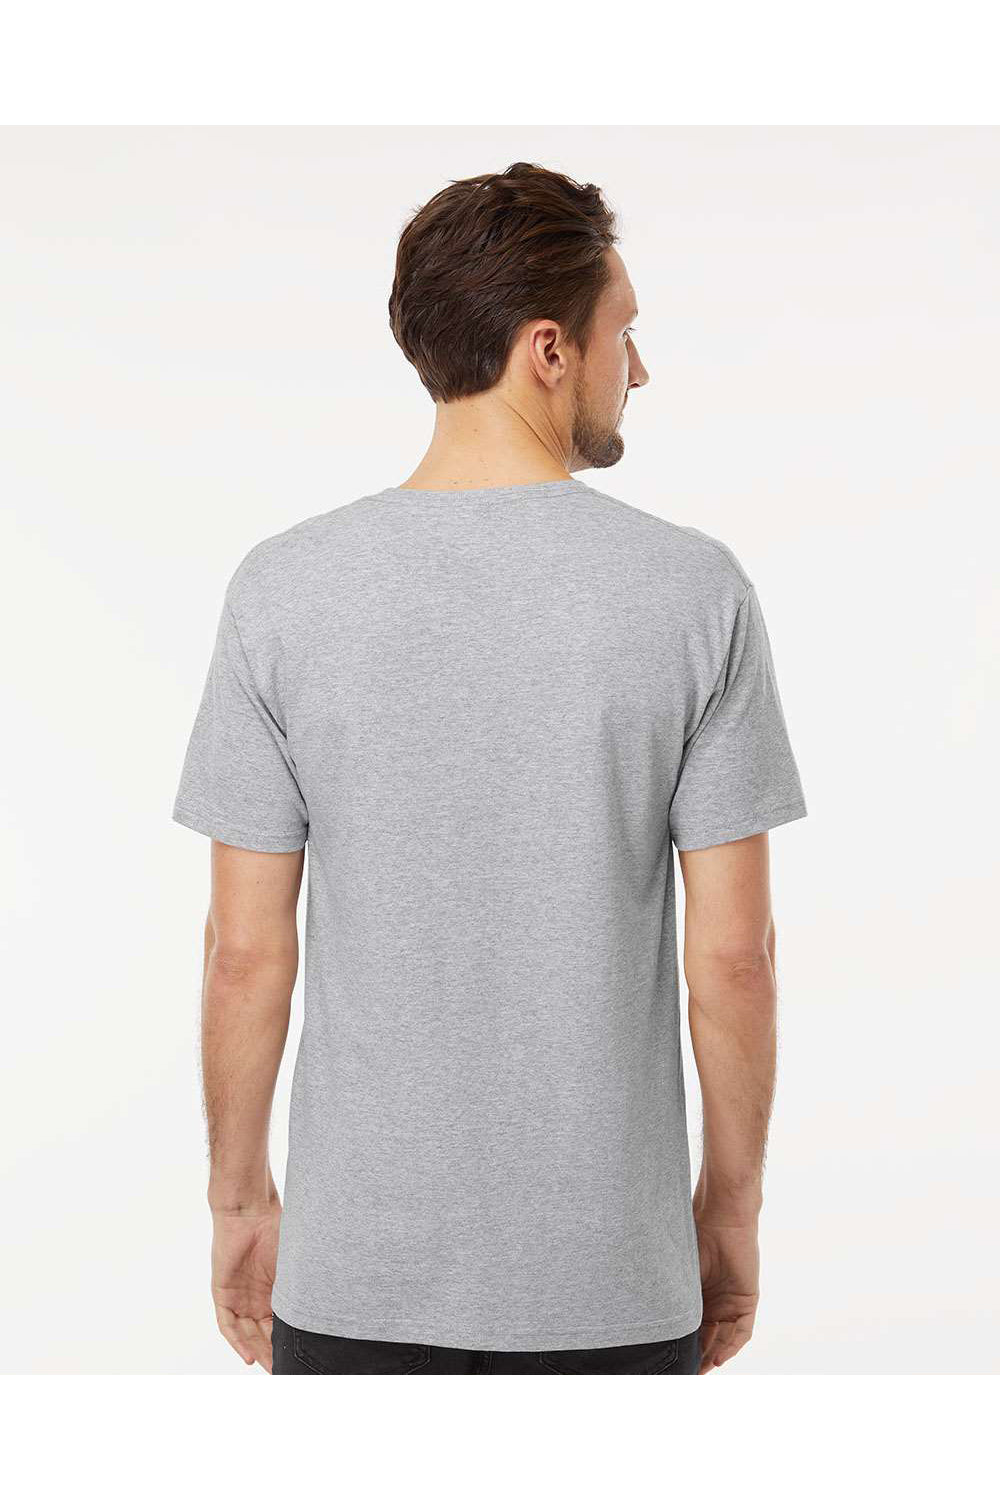 M&O 4800 Mens Gold Soft Touch Short Sleeve Crewneck T-Shirt Athletic Grey Model Back